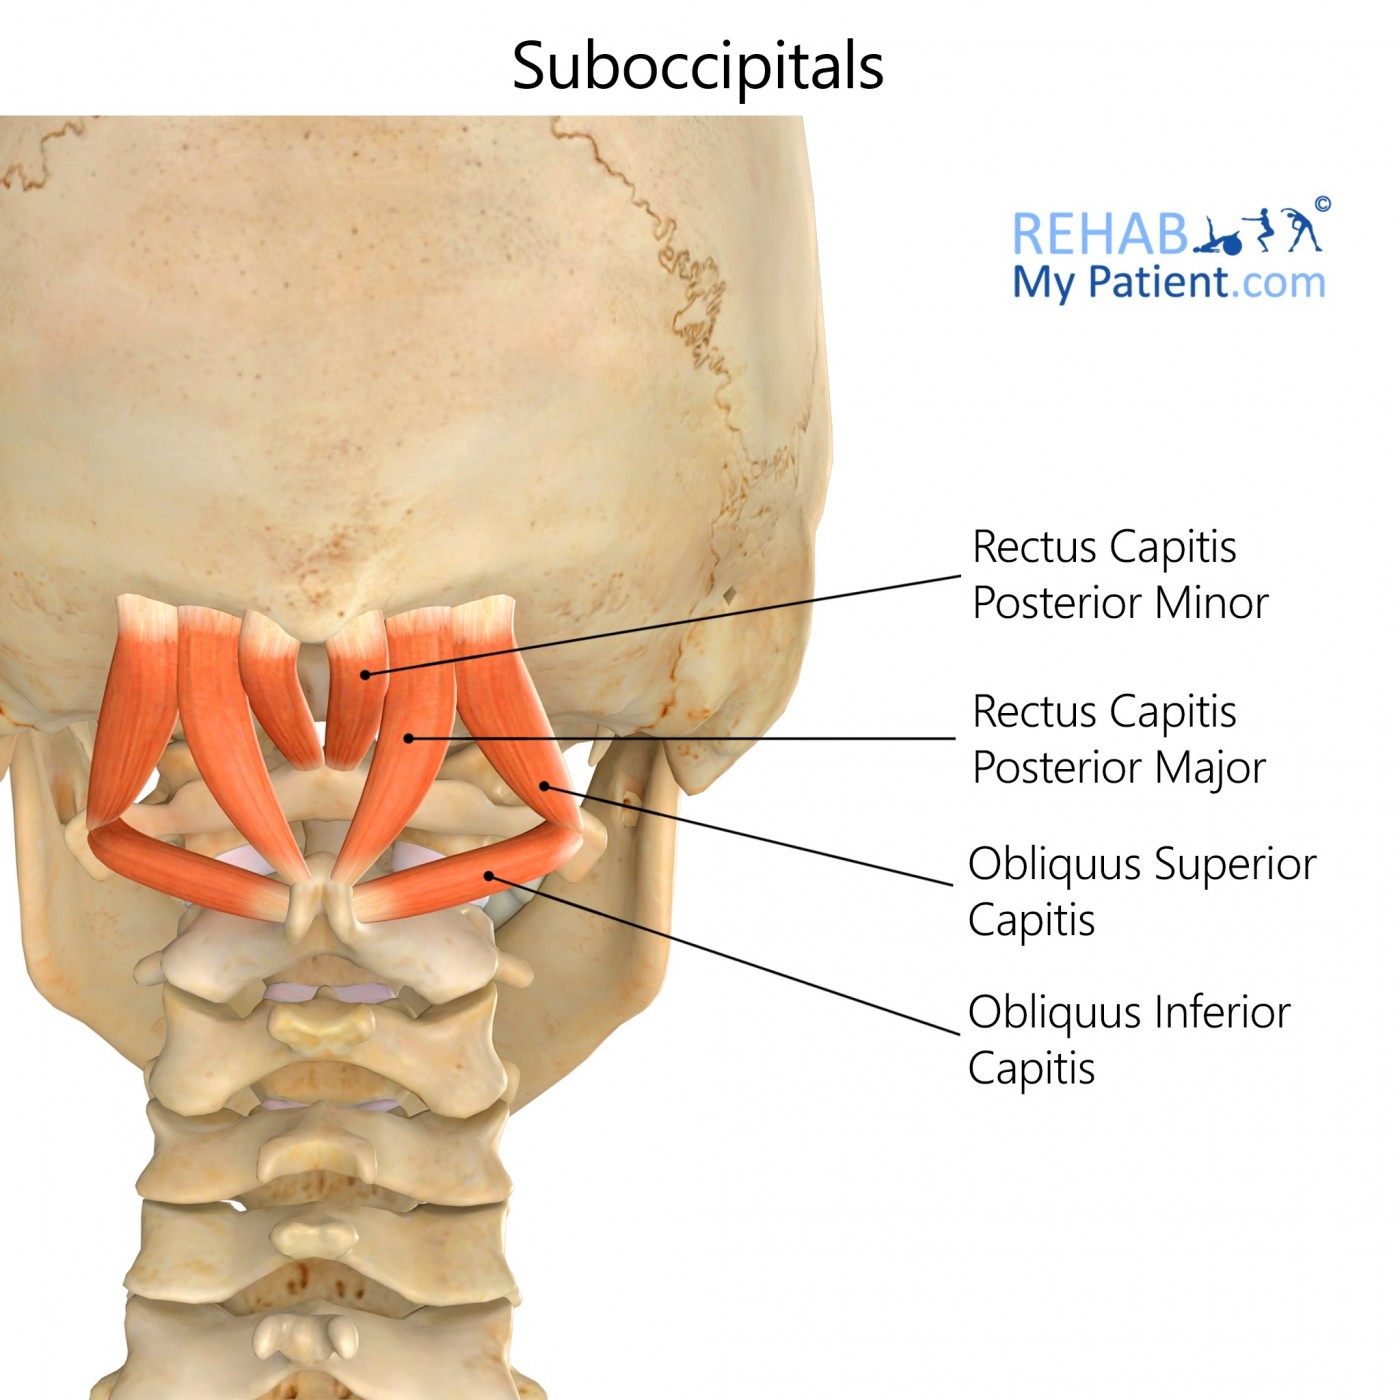 Suboccipitals | Rehab My Patient